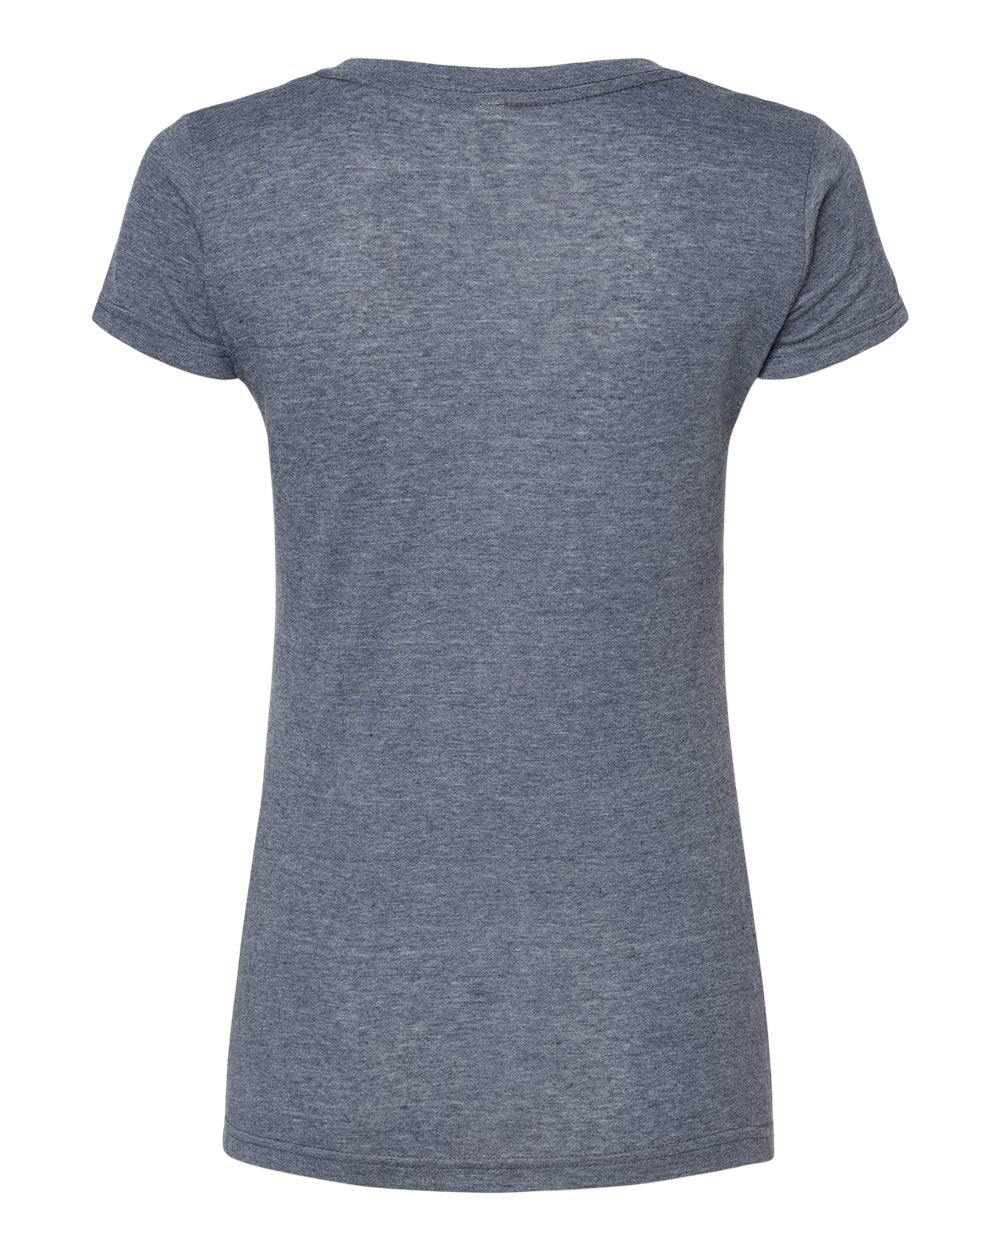 M&O Women's Deluxe Blend V-Neck T-Shirt 3542 #color_Heather Navy